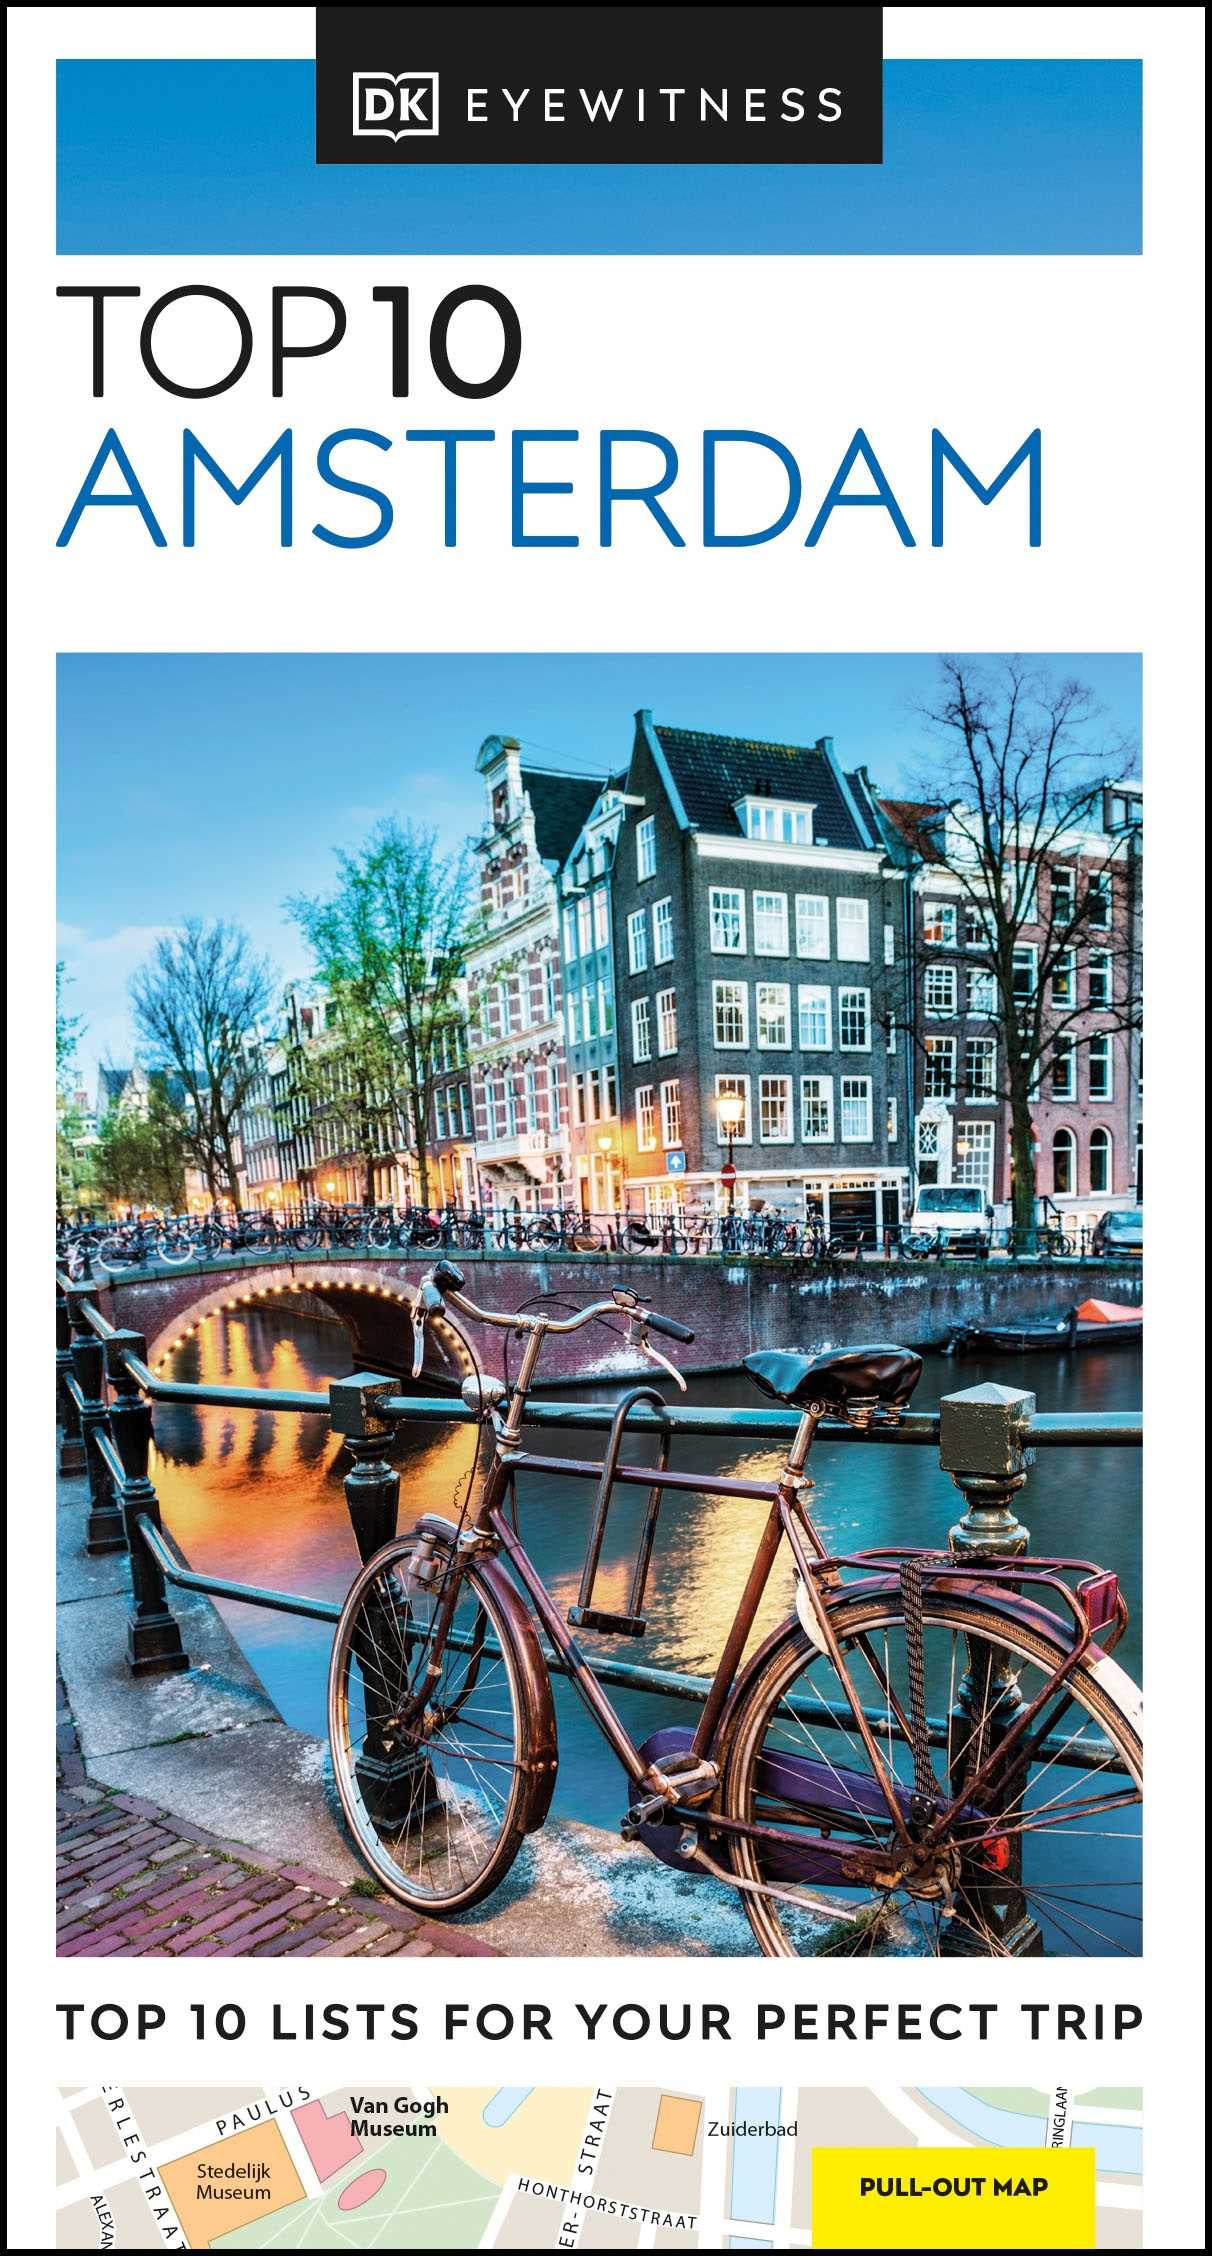 DK Eyewitness Top 10 Amsterdam (2021 Edition)